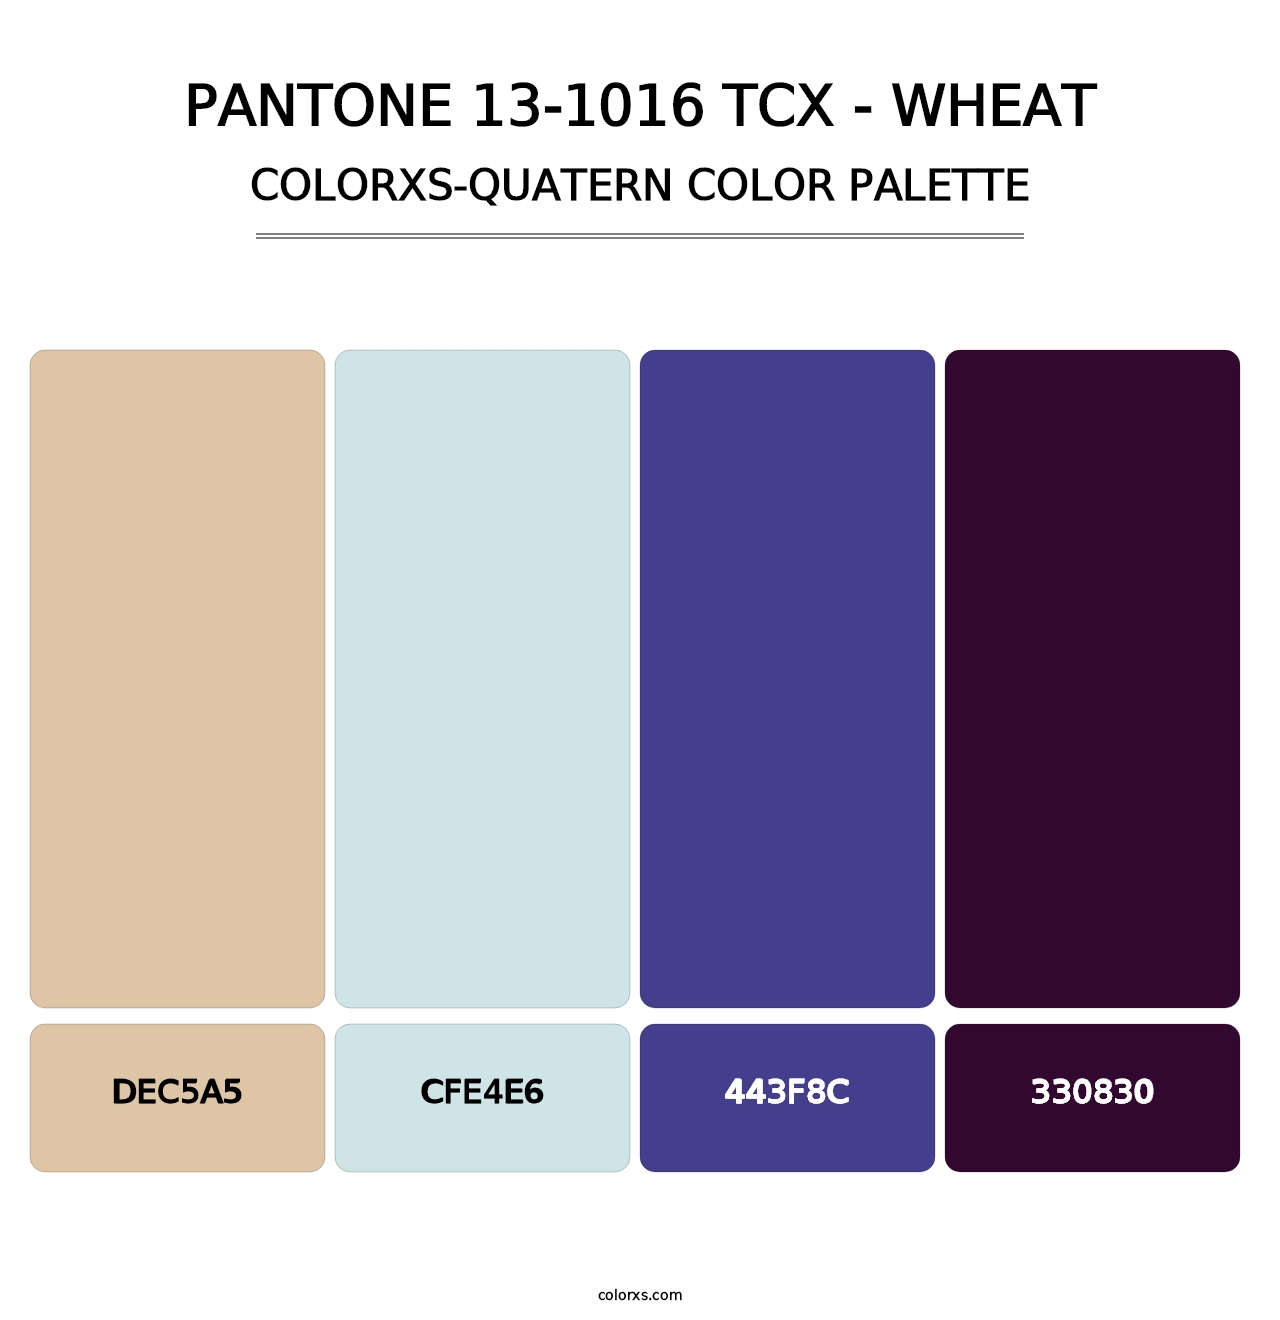 PANTONE 13-1016 TCX - Wheat - Colorxs Quatern Palette